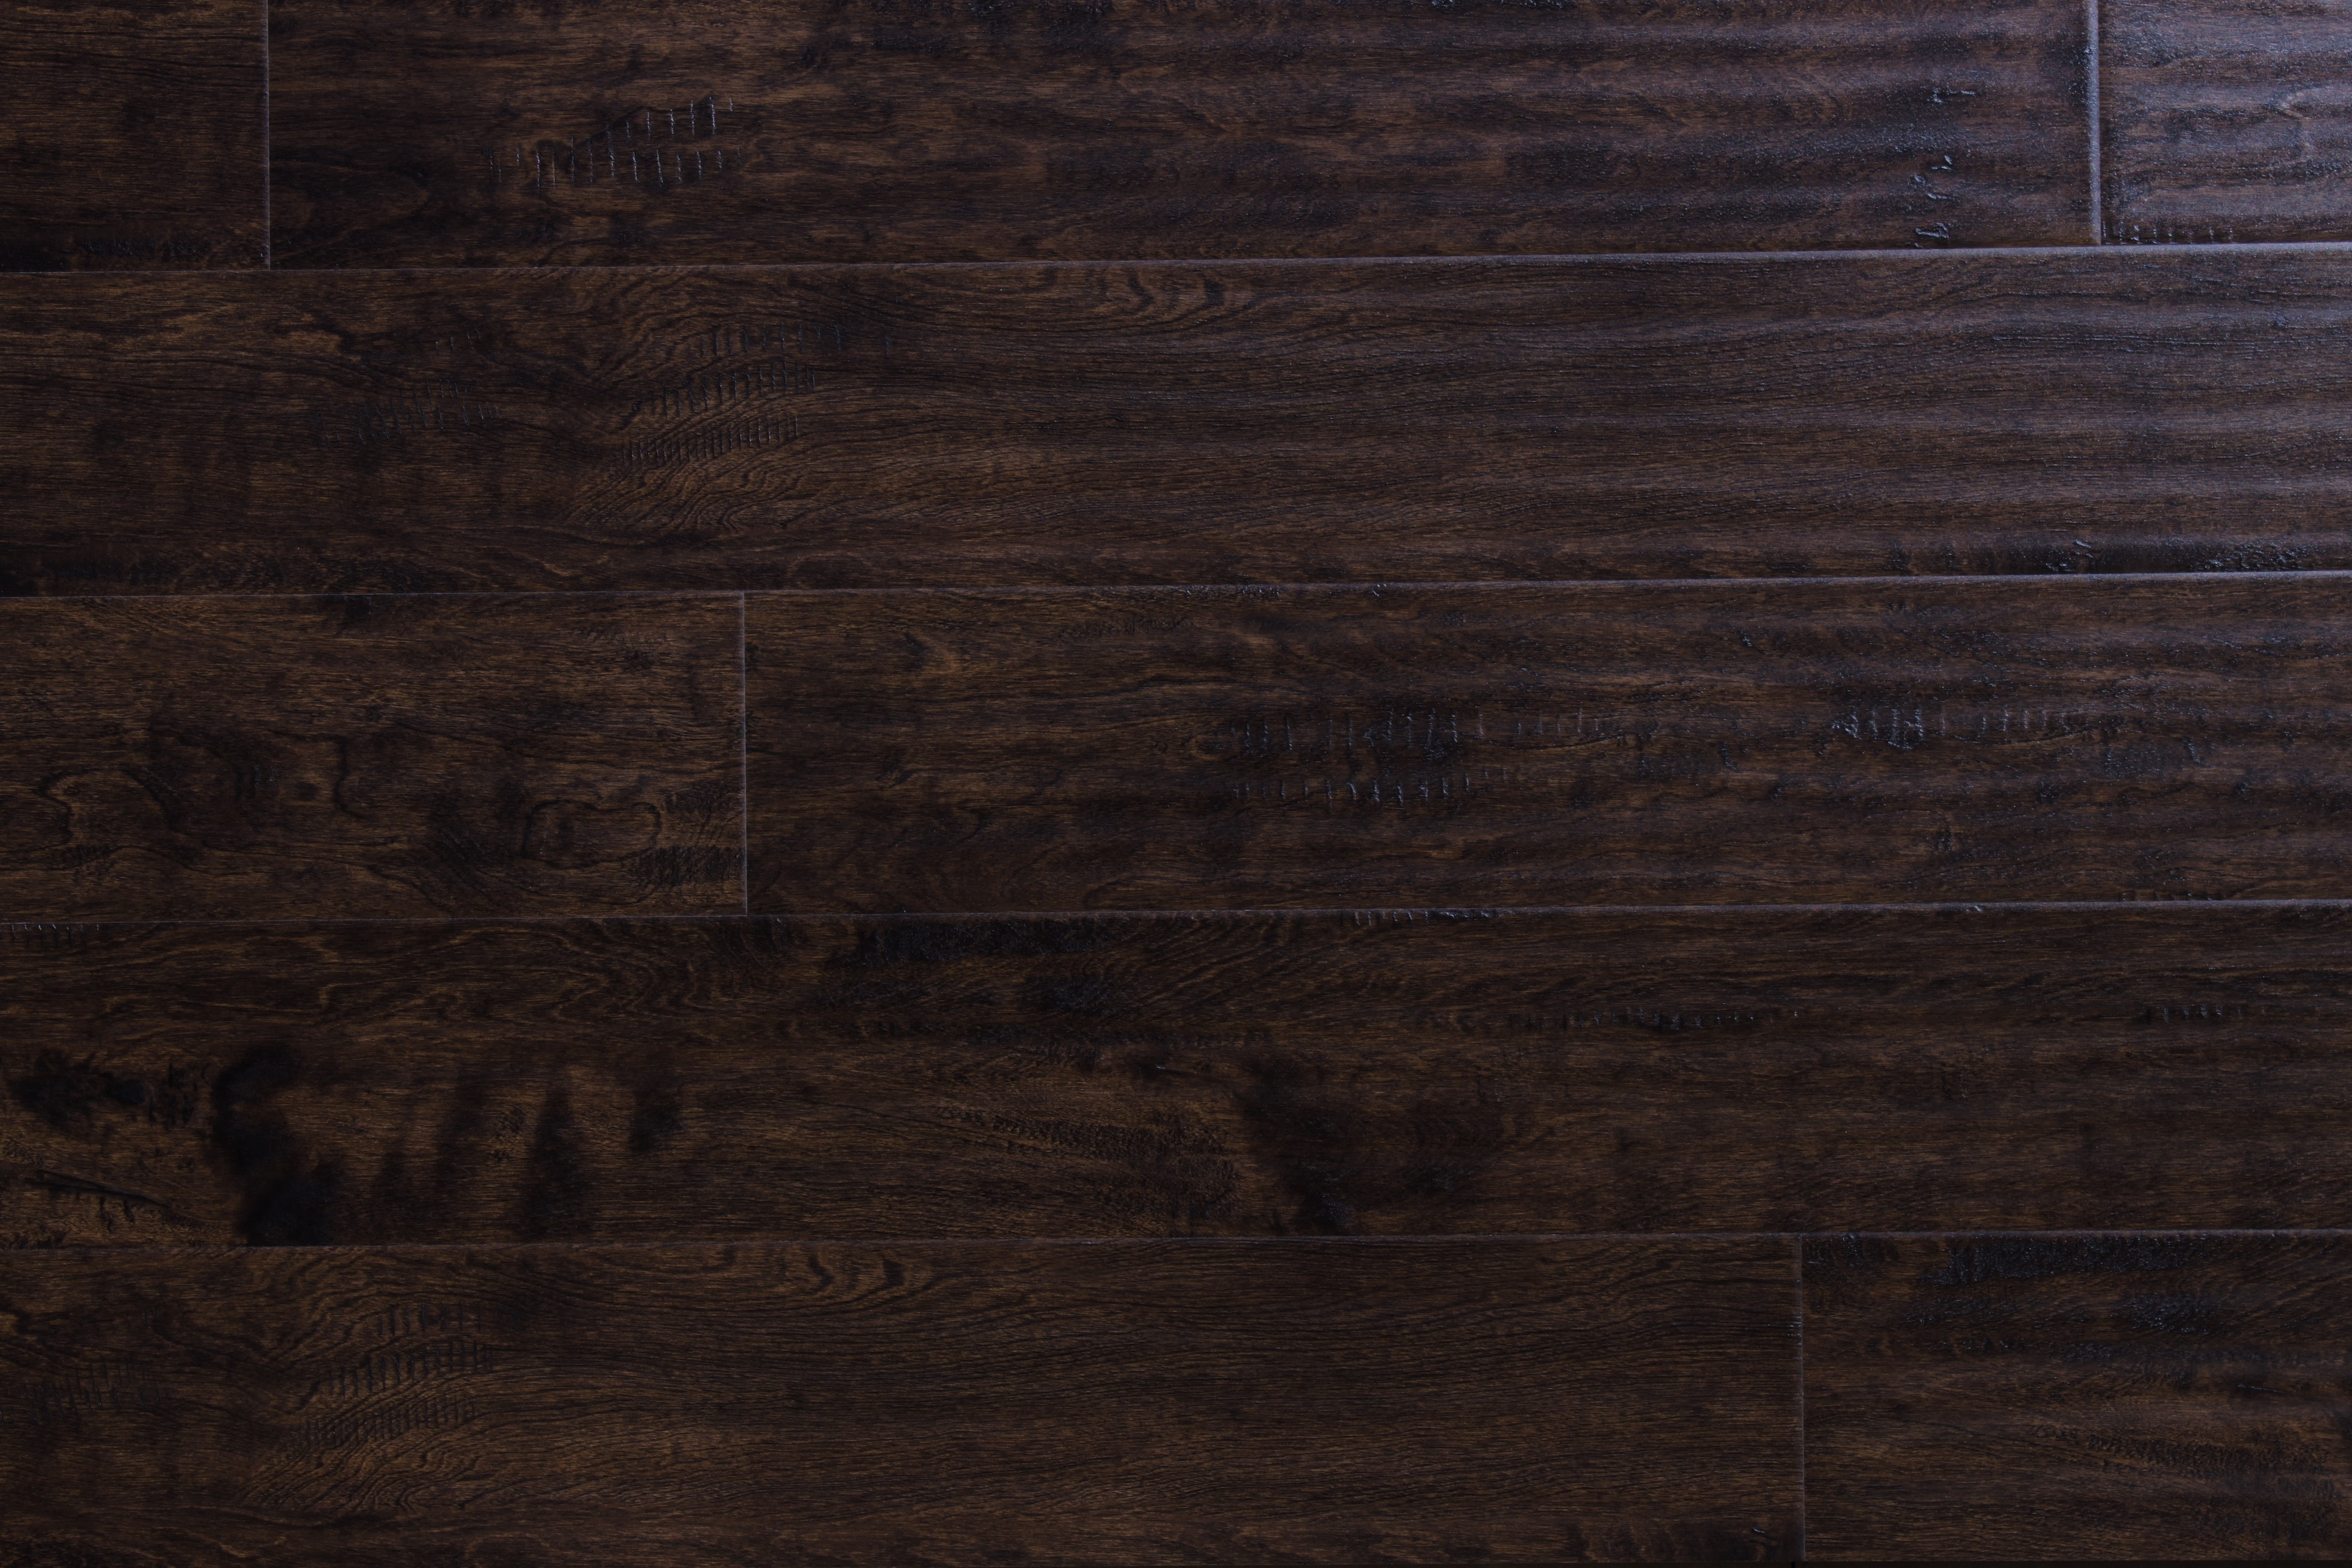 28 Stylish Bruce Hardwood Laminate Flooring 2023 free download bruce hardwood laminate flooring of wood flooring free samples available at builddirecta with regard to tailor multi gb 5874277bb8d3c